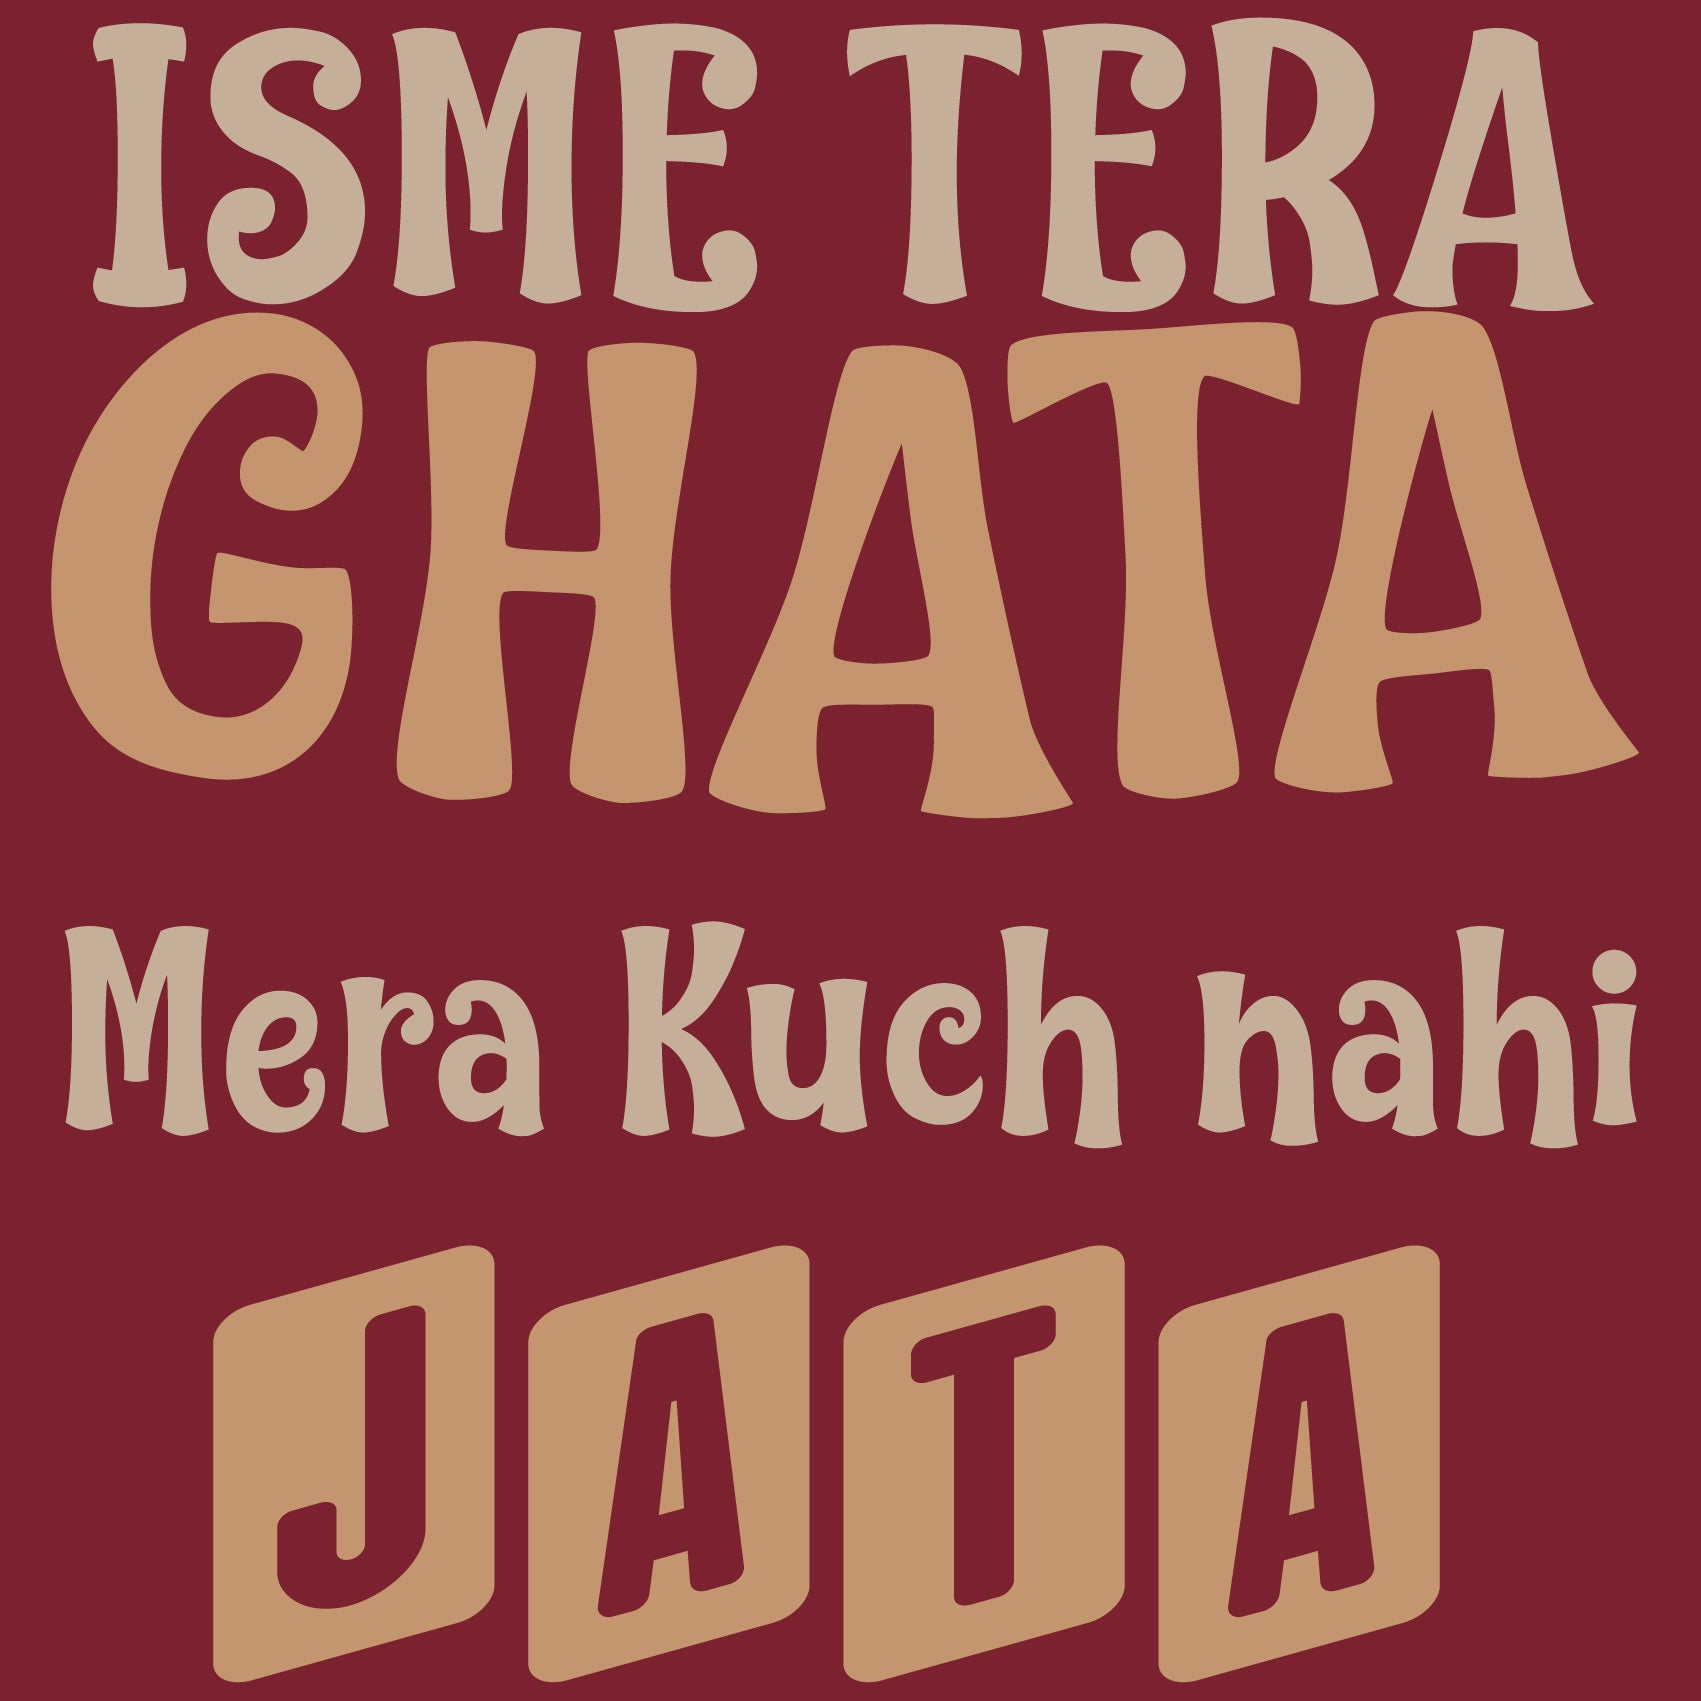 Isme Tera Ghata Reactr Tshirts For Men - Eyewearlabs